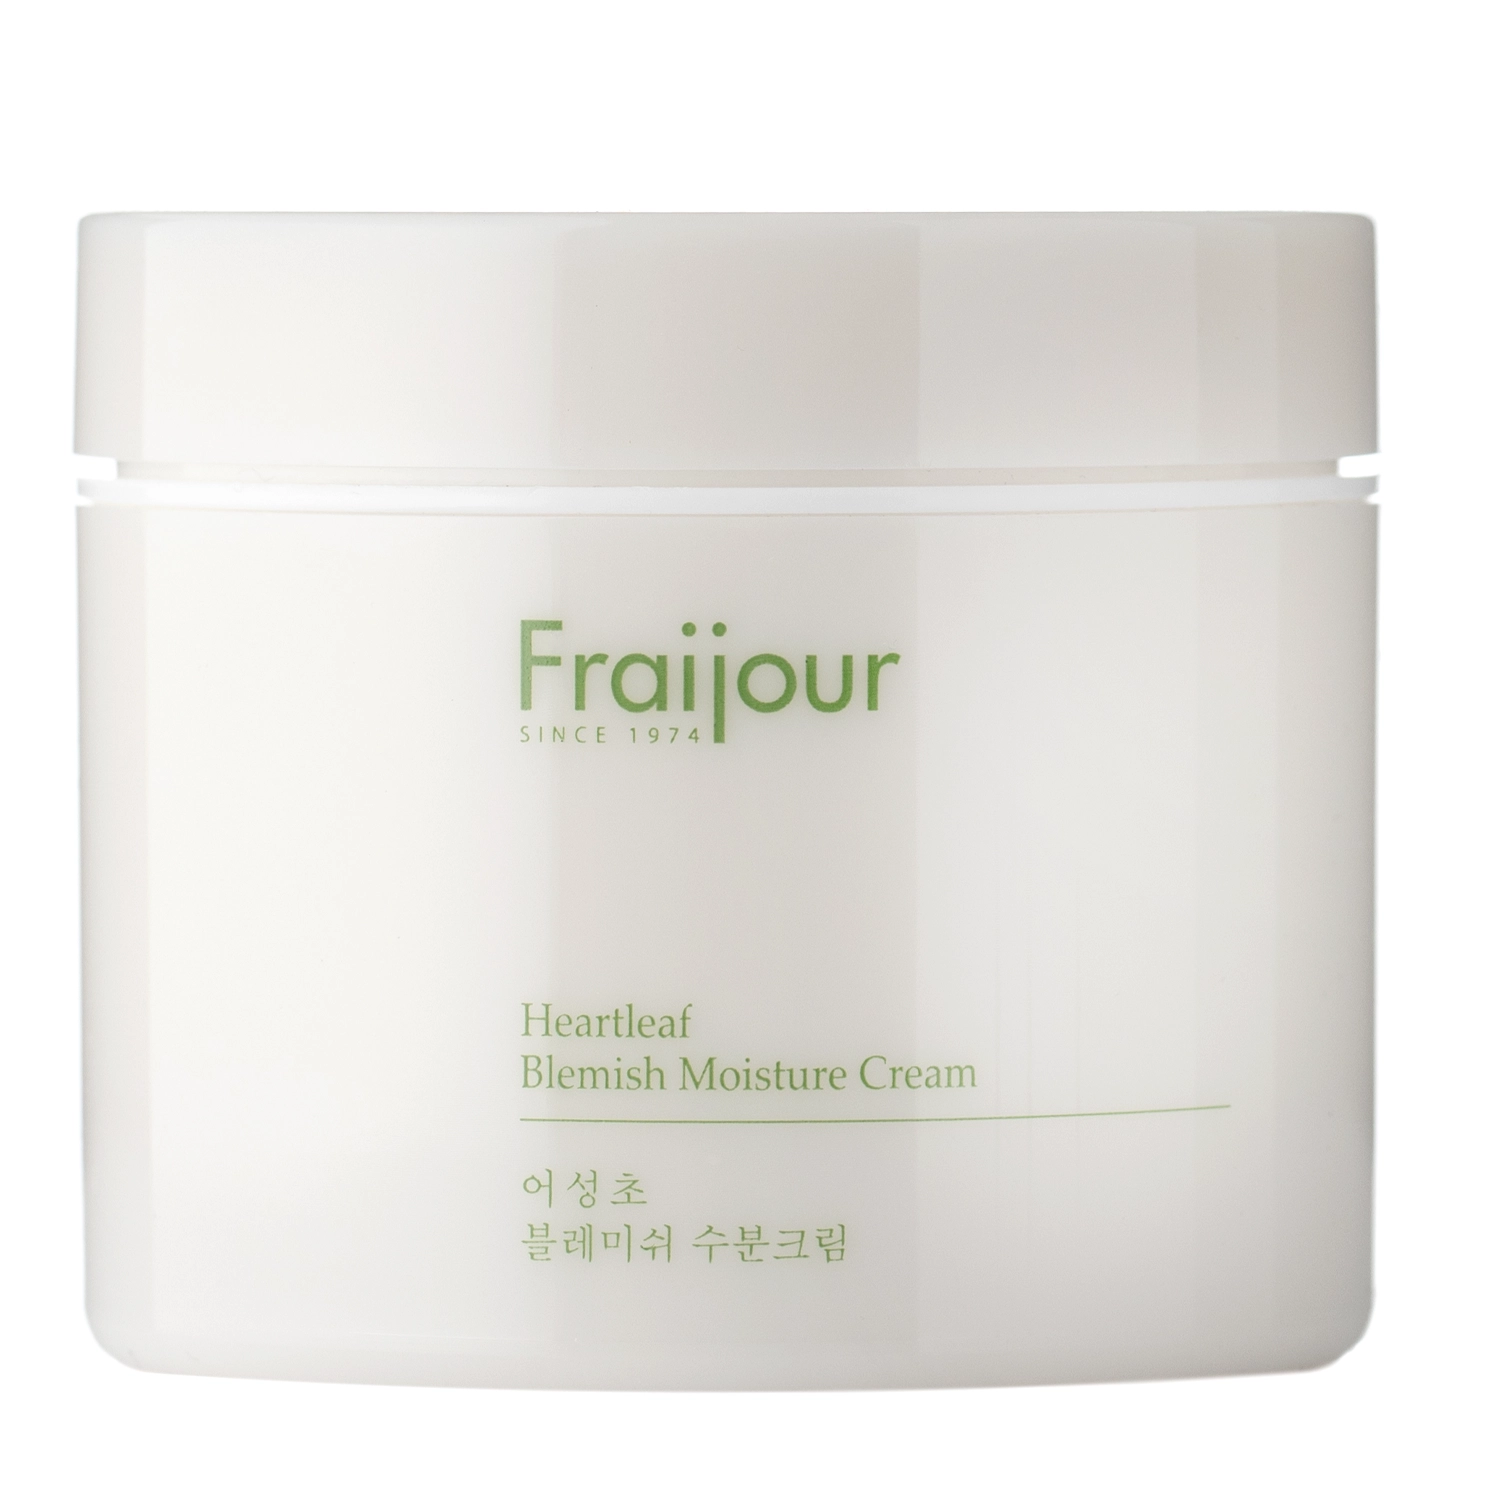 Fraijour - Heartleaf Blemish Moisture Cream - 100ml